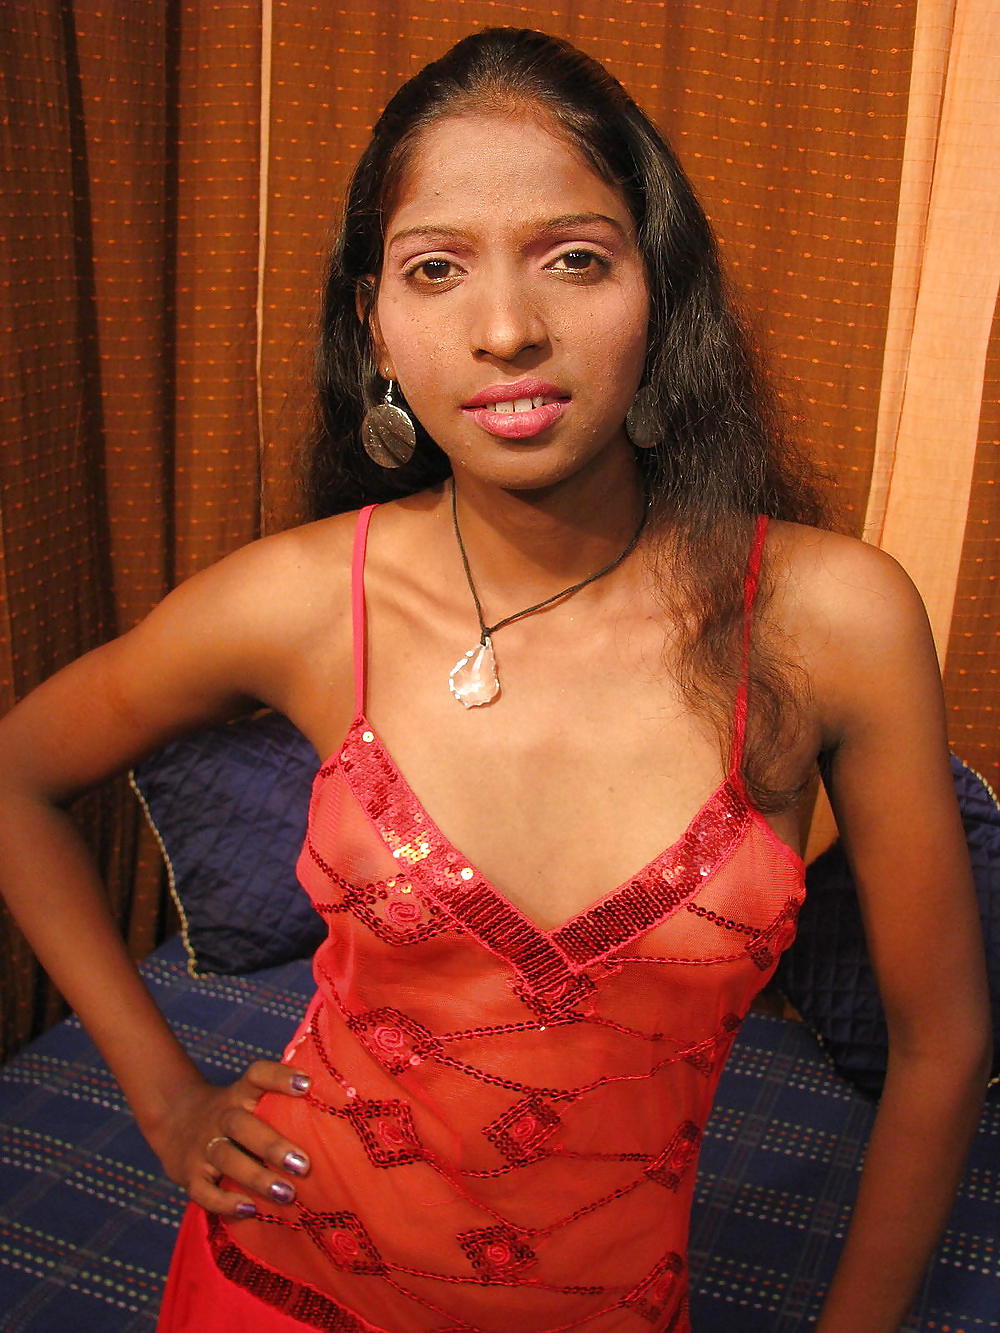 Desi Bala Chaud Et Sexy - Hardcore Indien #24978375